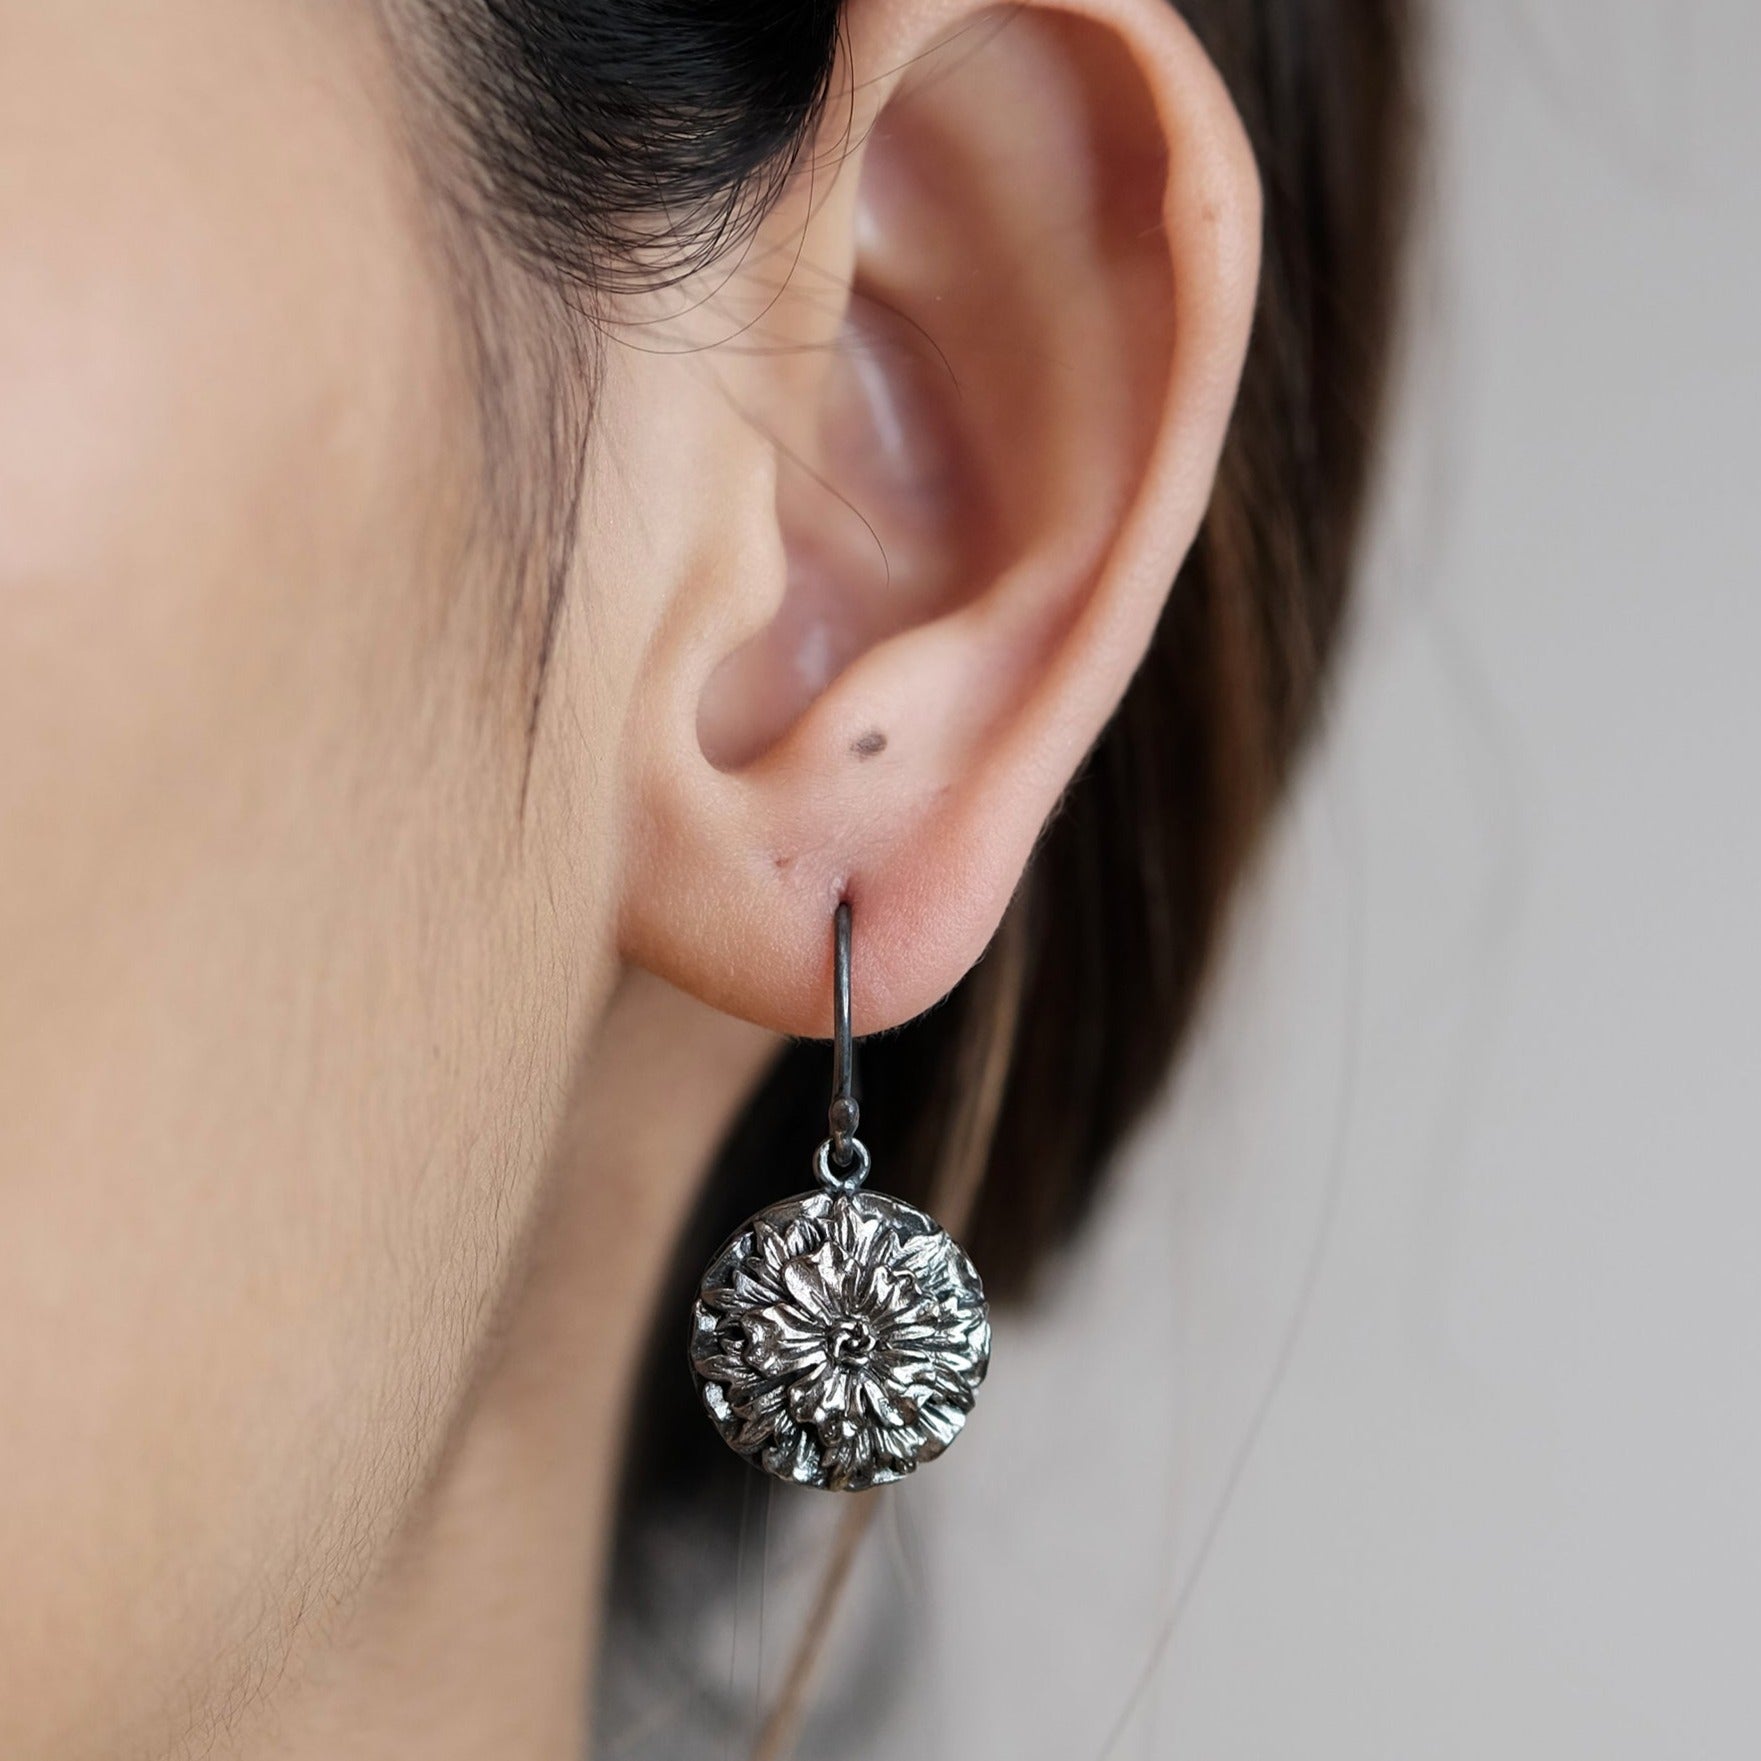 The Madstone flower earrings